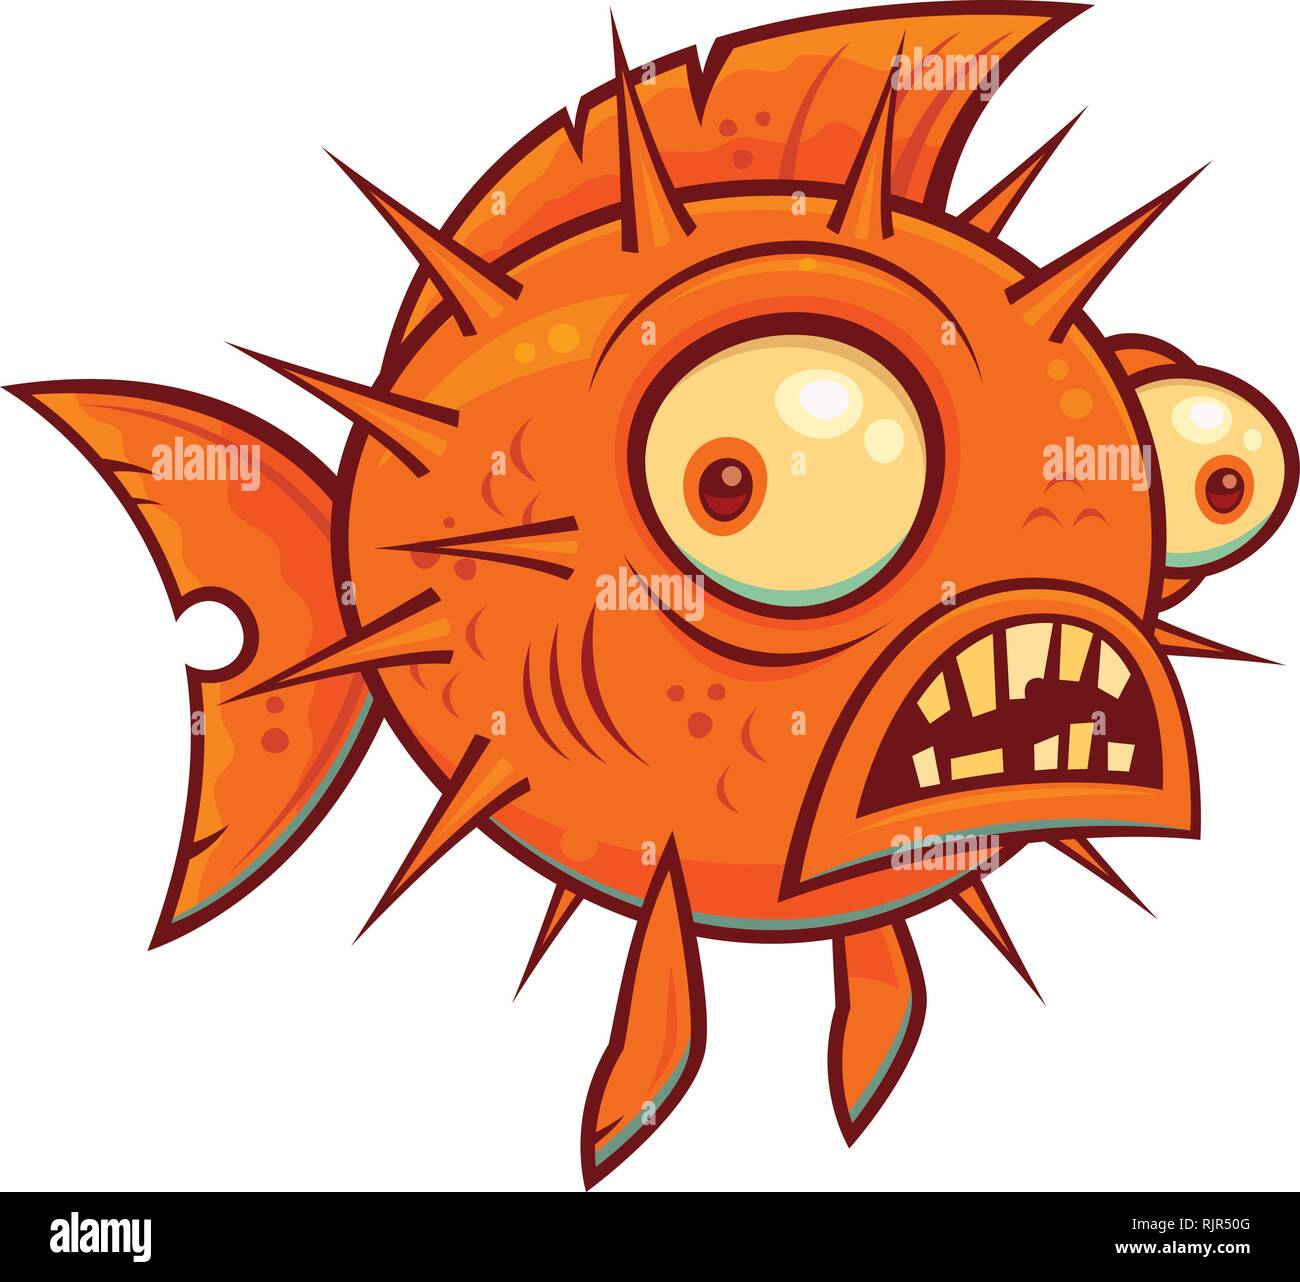 Vector cartoon illustration of a wacky pufferfish or blowfish. Stock Vector